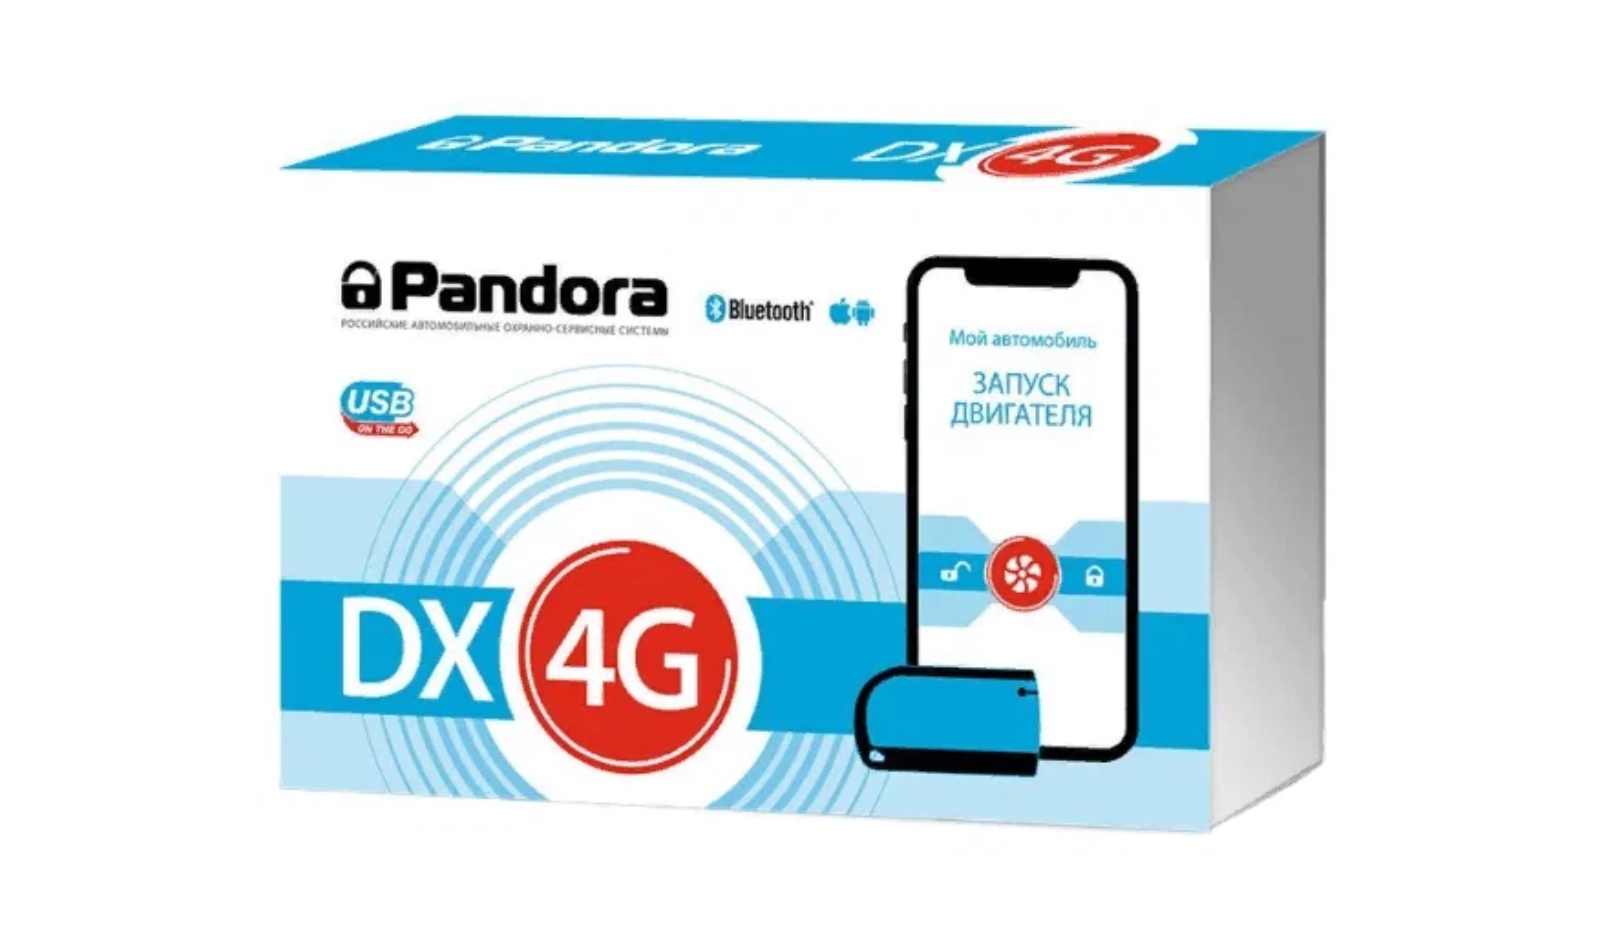 Pandora DX-4G Пандора (Pandora)